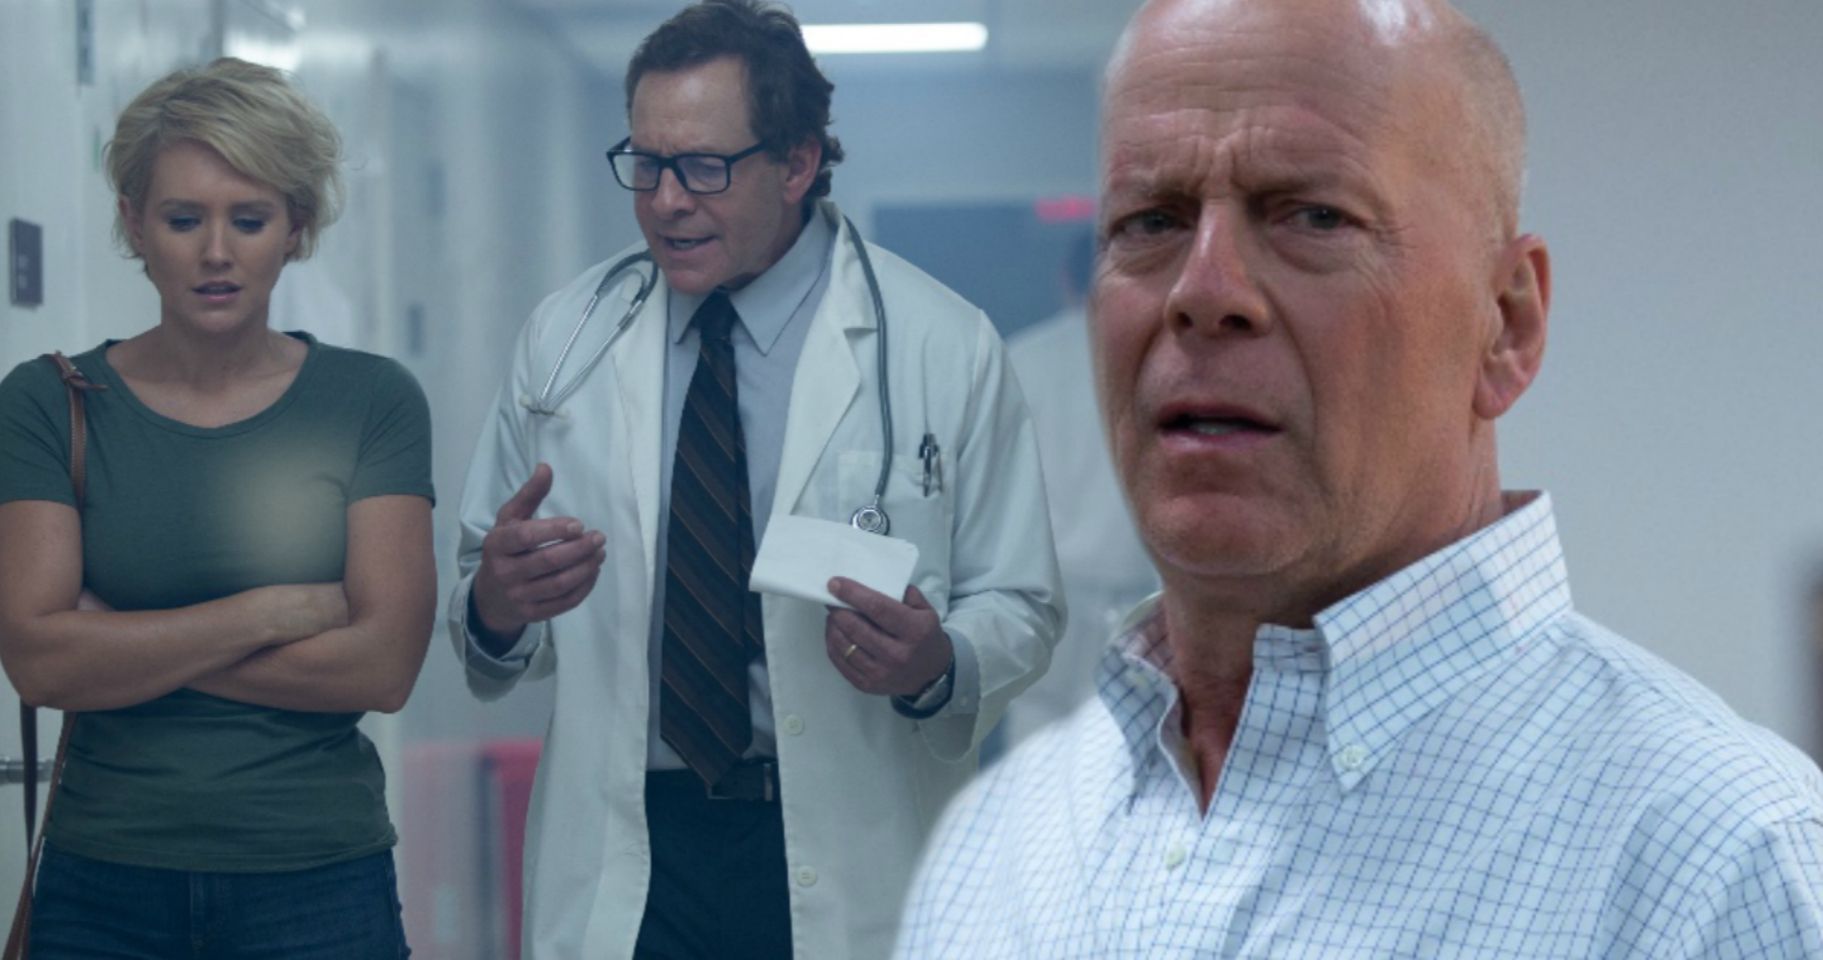 Trauma Center Trailer Teams Bruce Willis with Police Academy Legend Steve Guttenberg